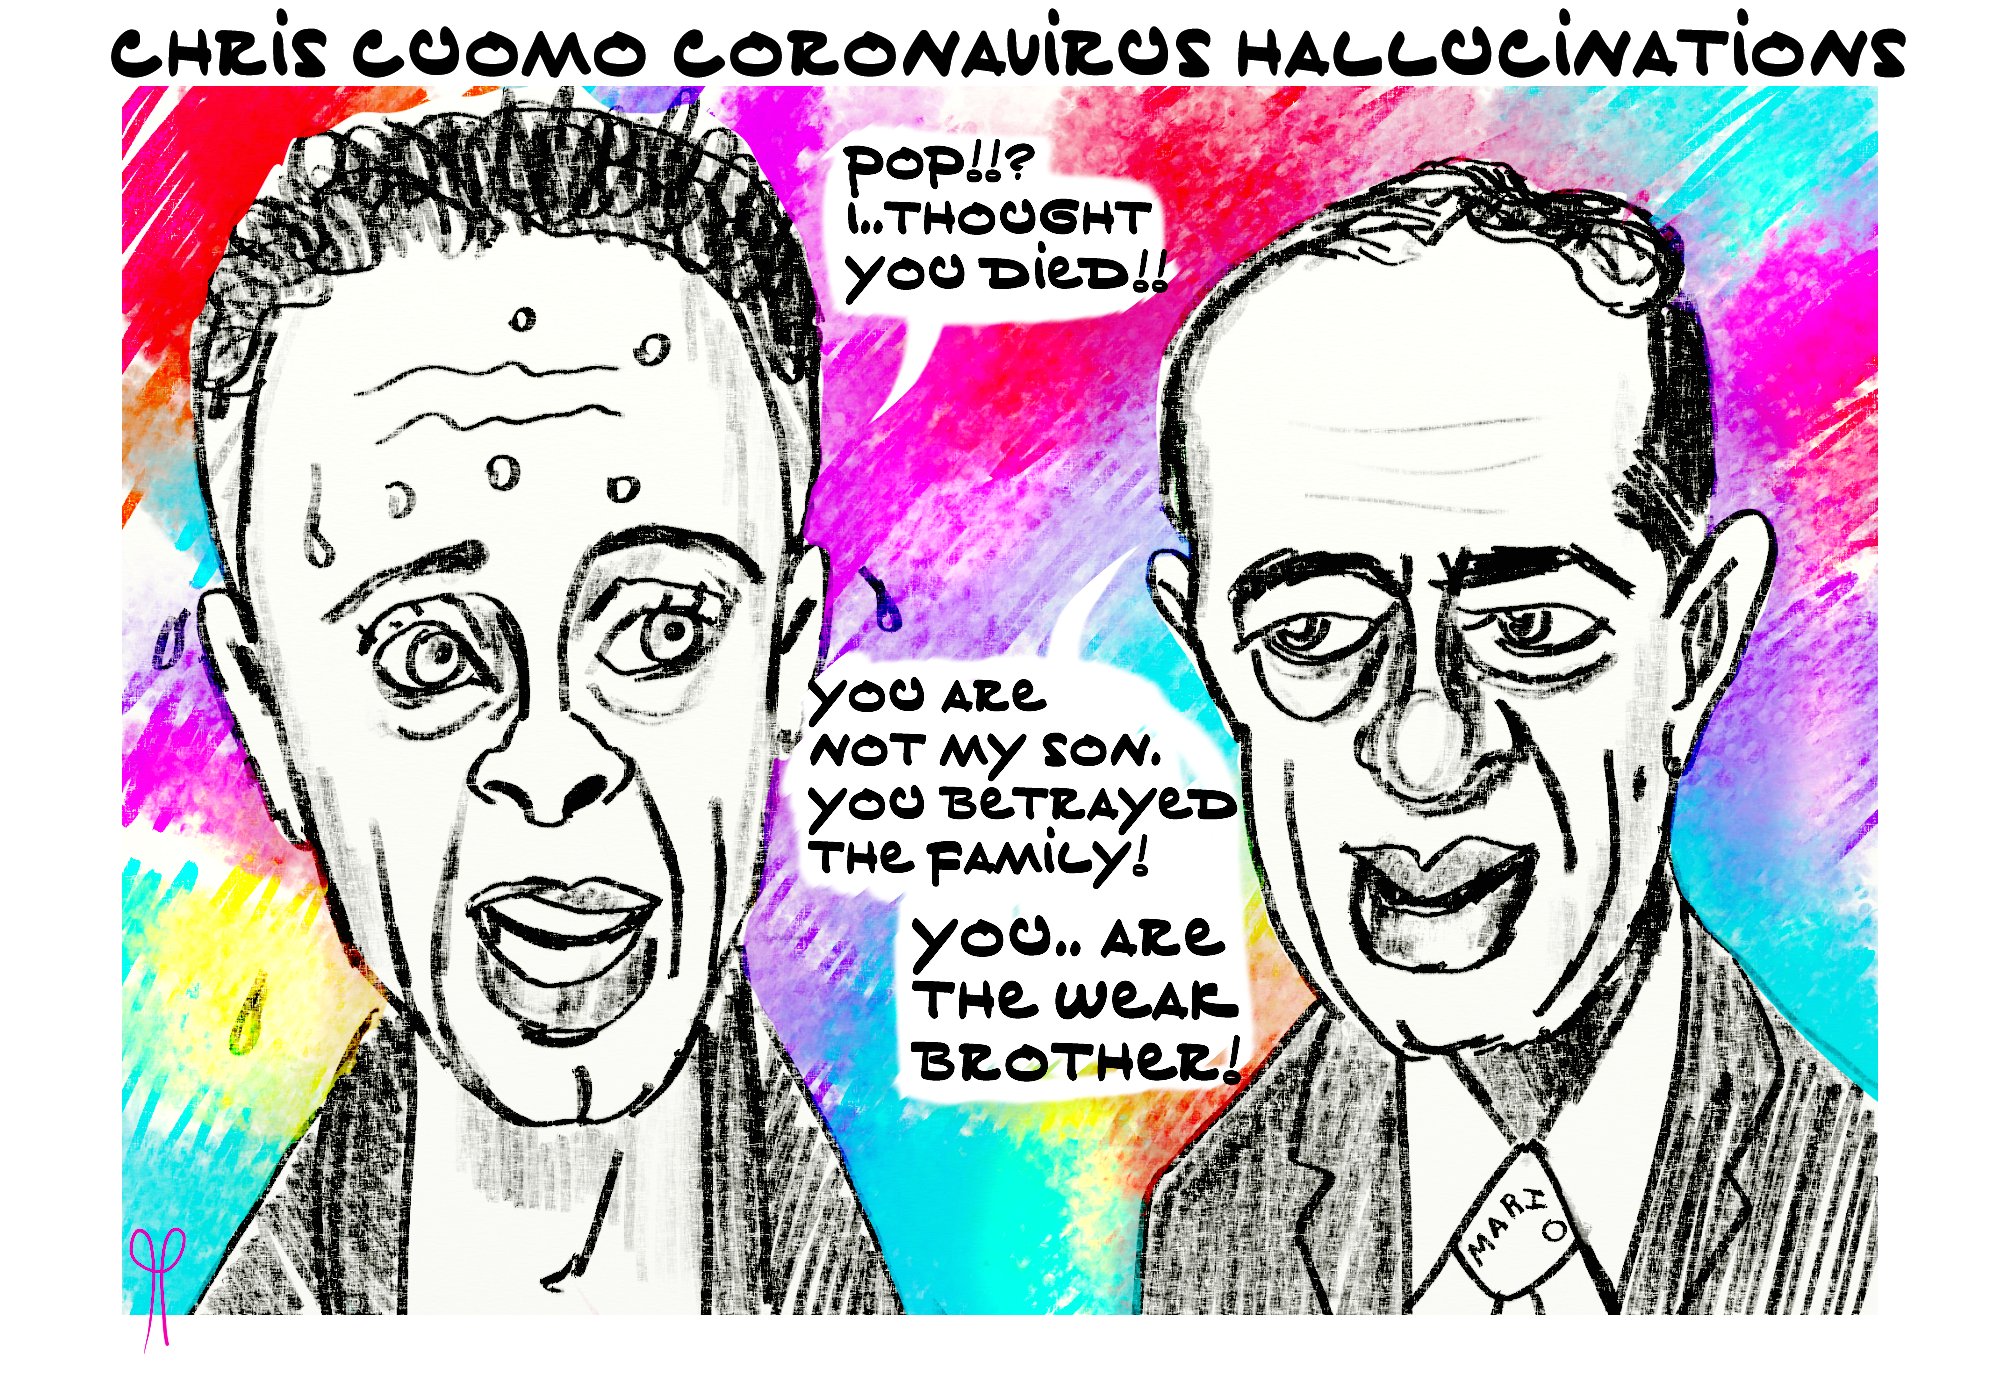 Chris Cuomo Mario Cuomo political cartoon Fredo coronavirus hallucinations ...